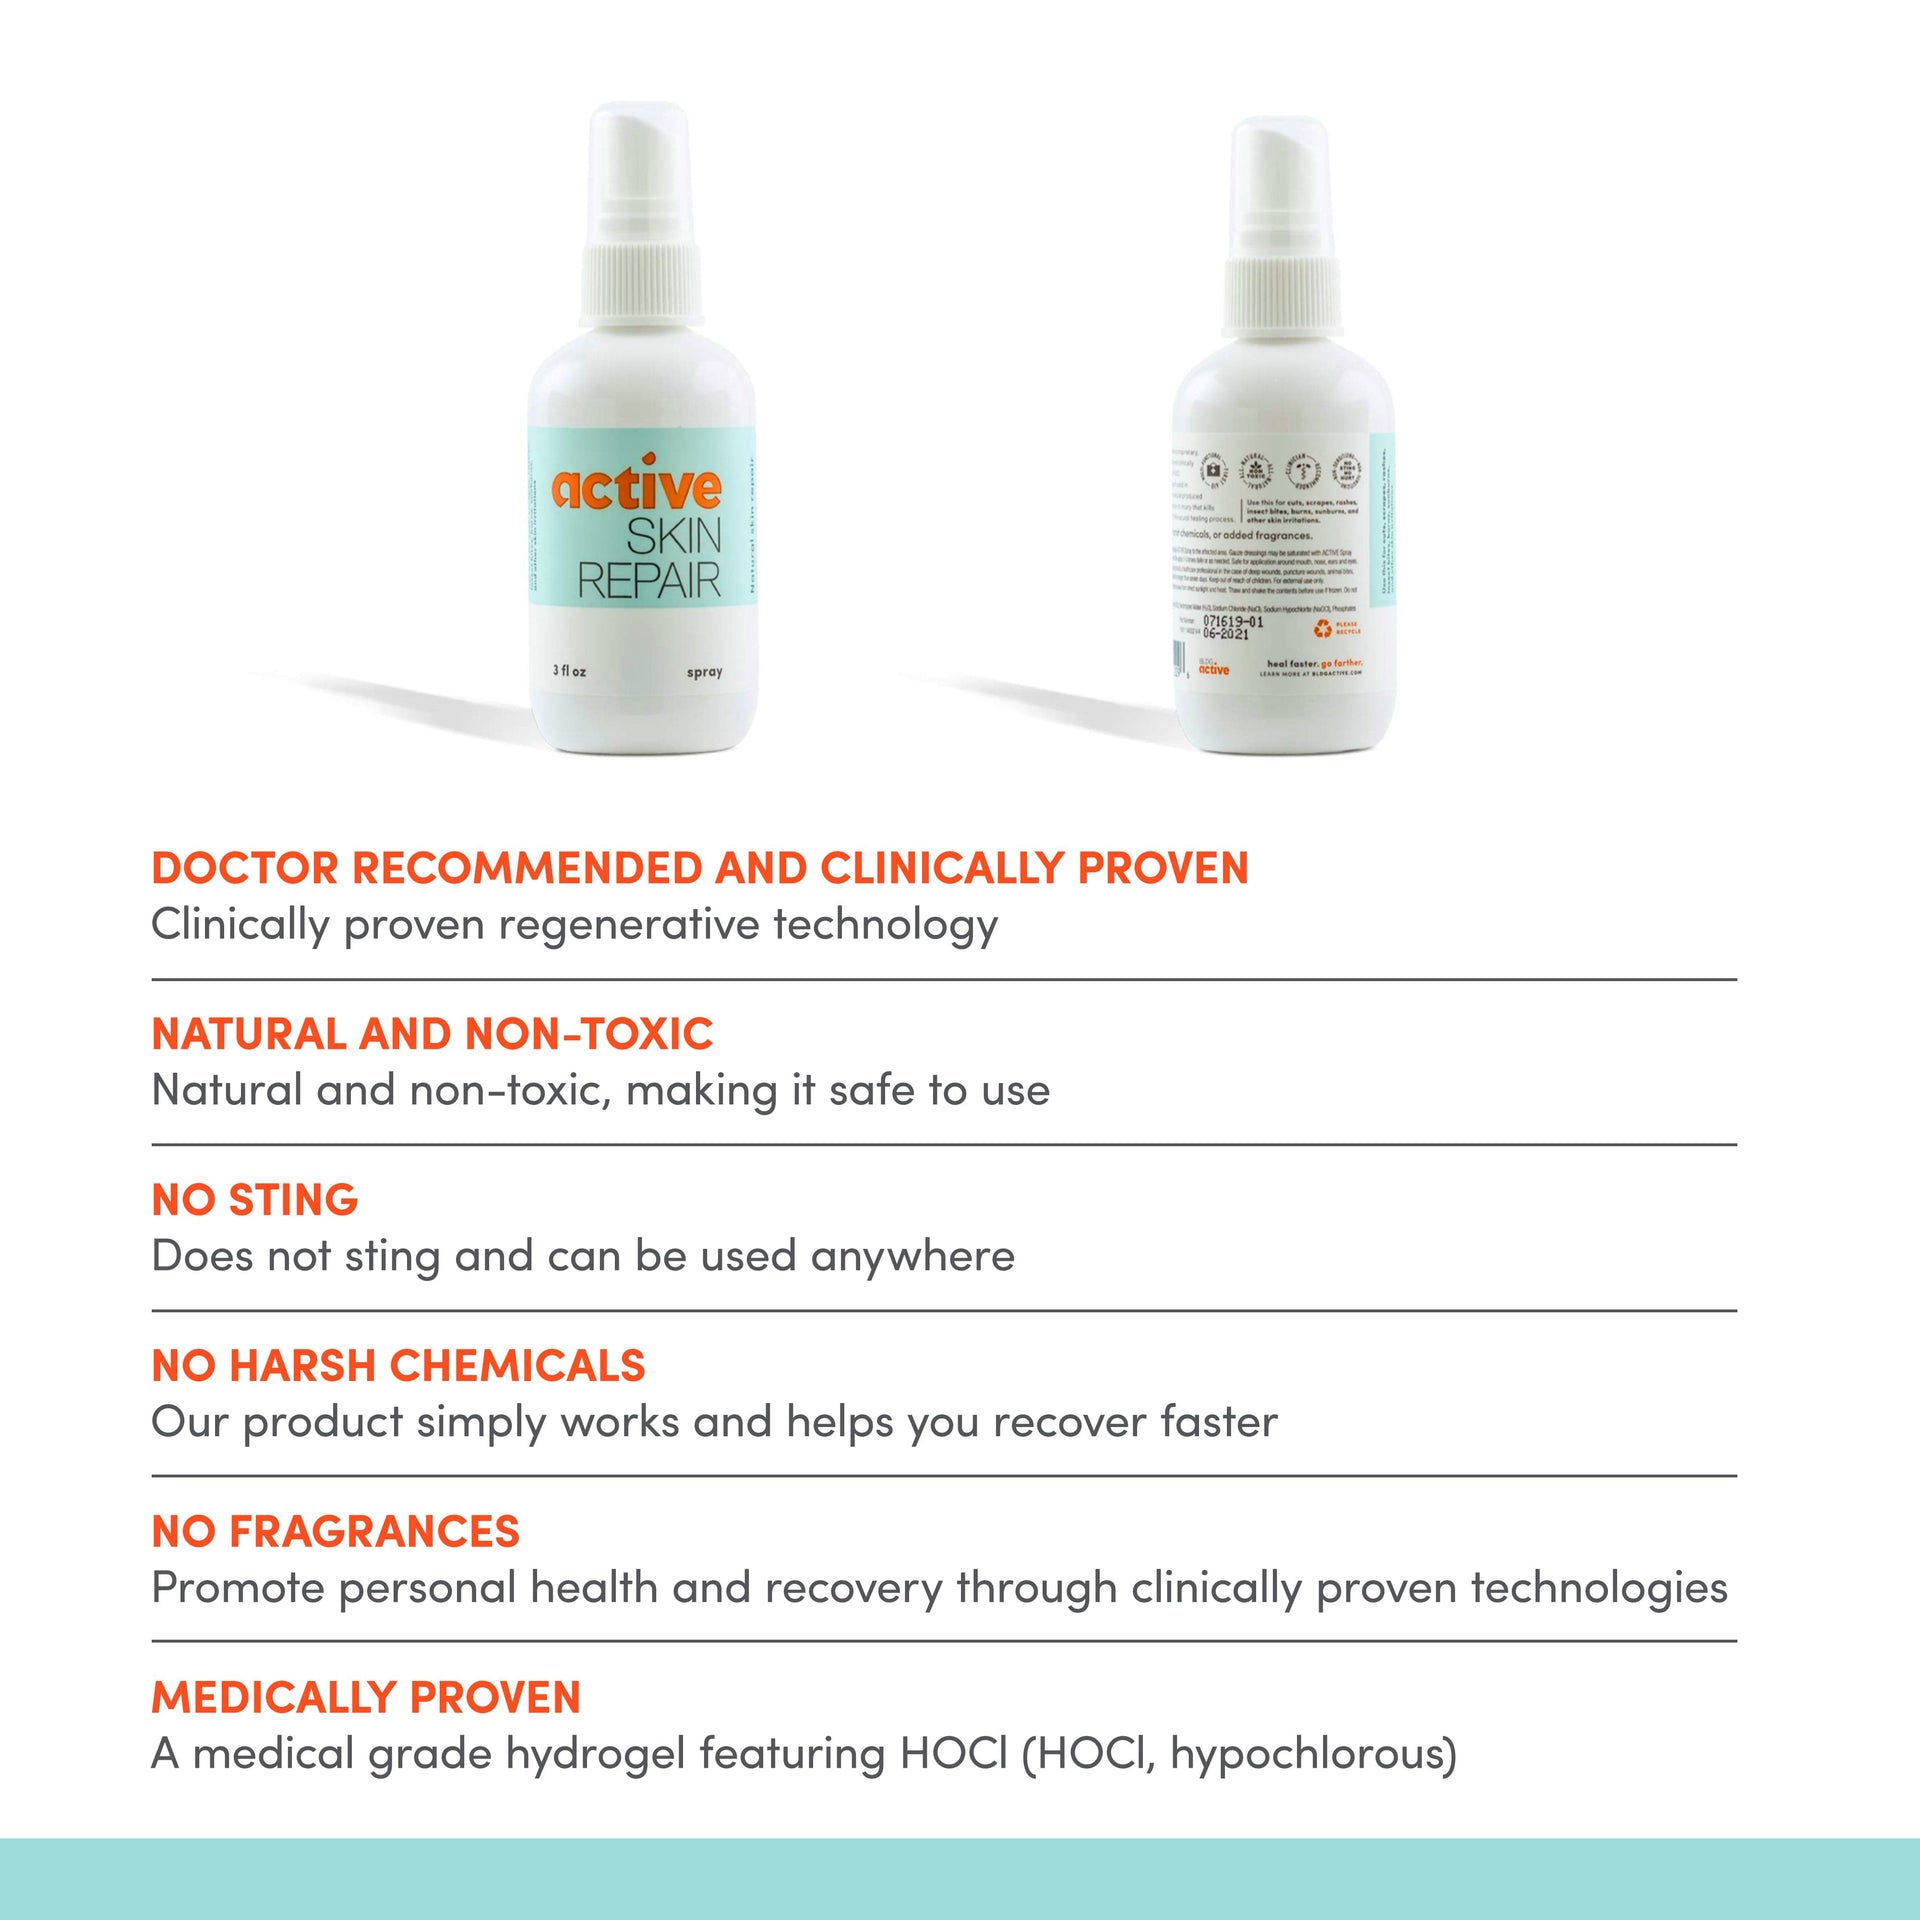 Active Skin Repair Spray and Hydrogel Bundle Benefits